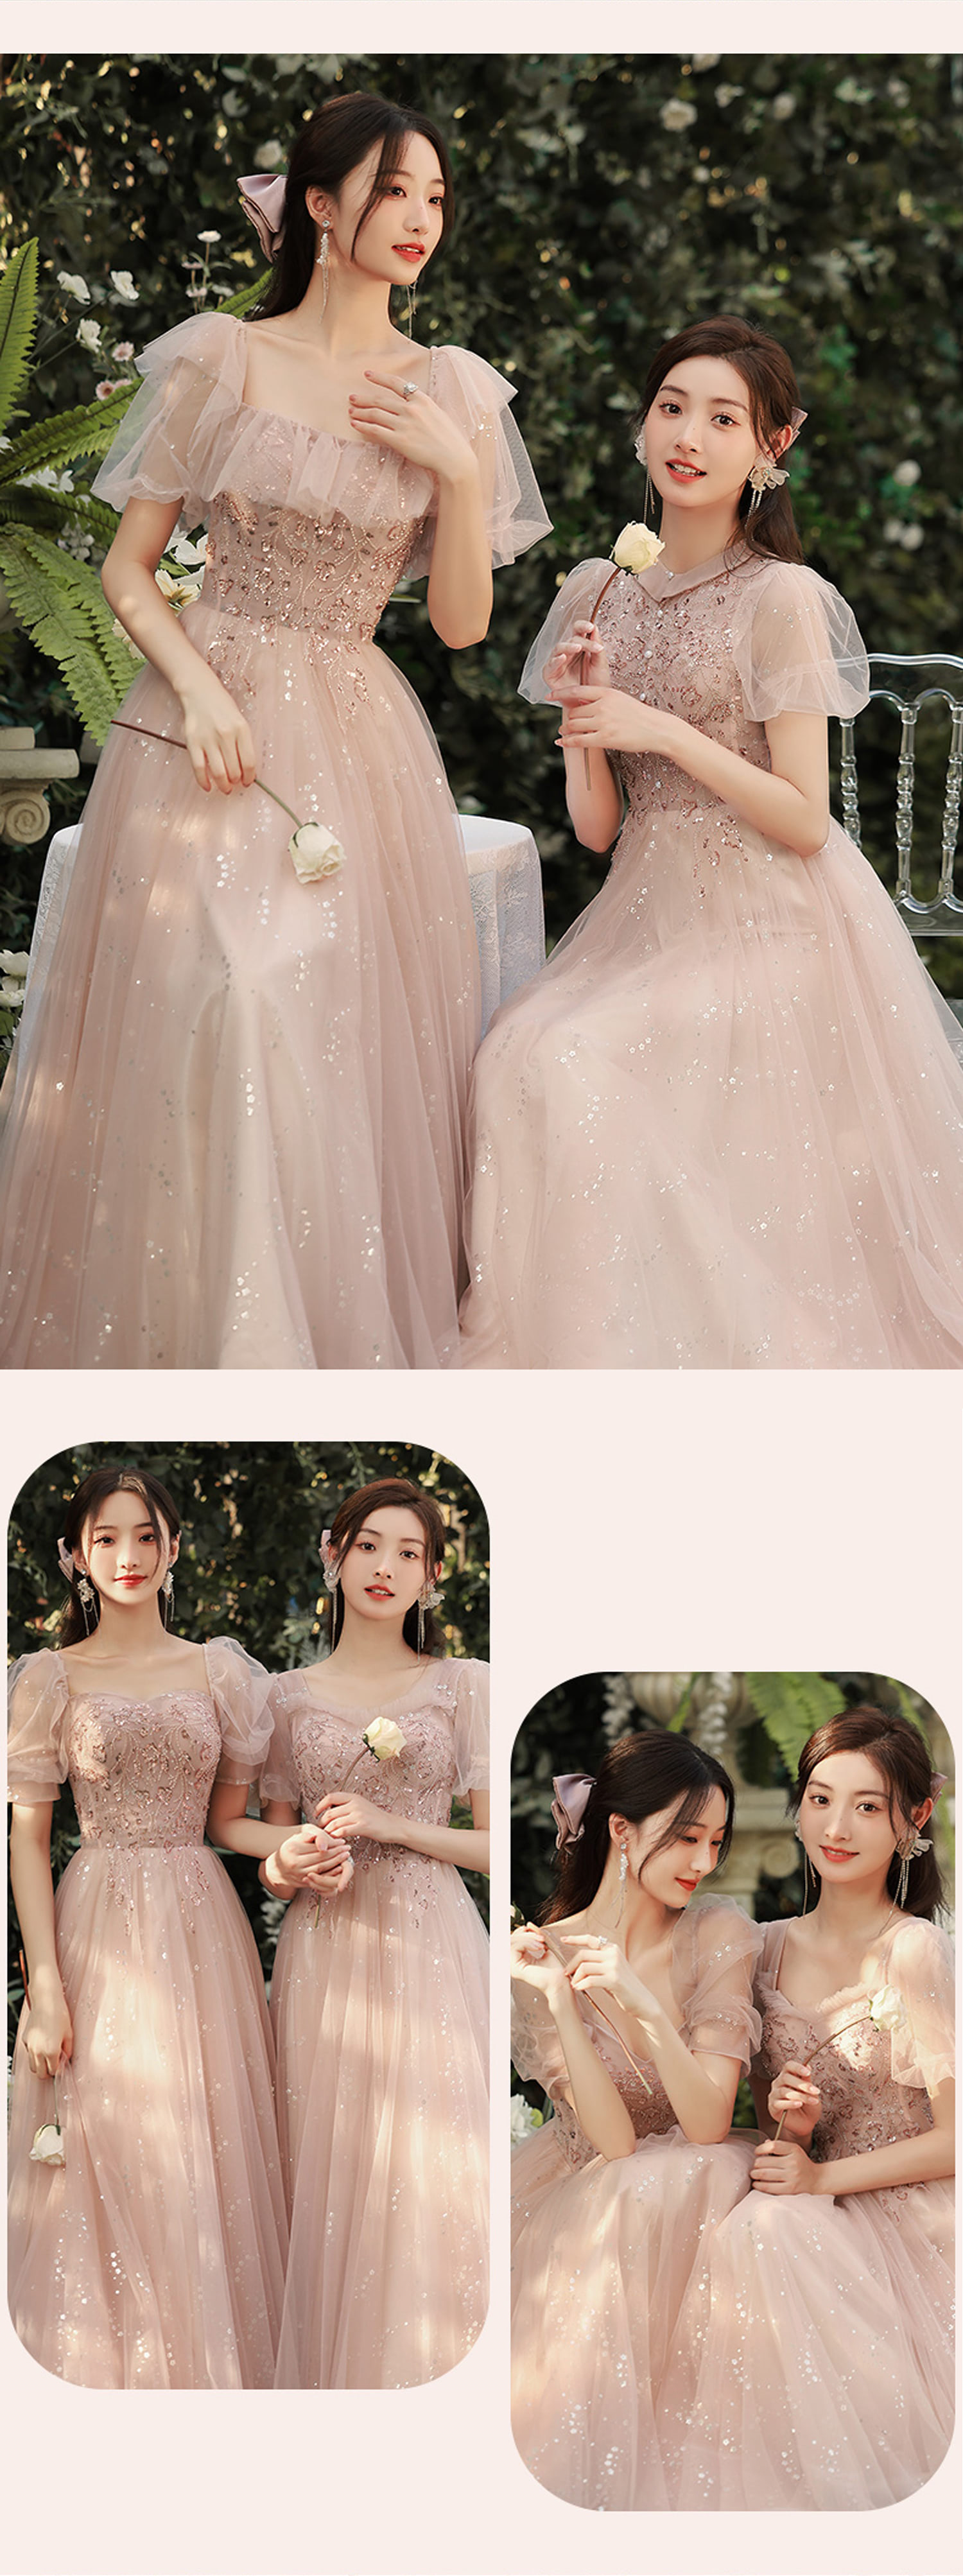 Aesthetic-Pink-Bridal-Wedding-Party-Bridesmaid-Long-Maxi-Dress17.jpg